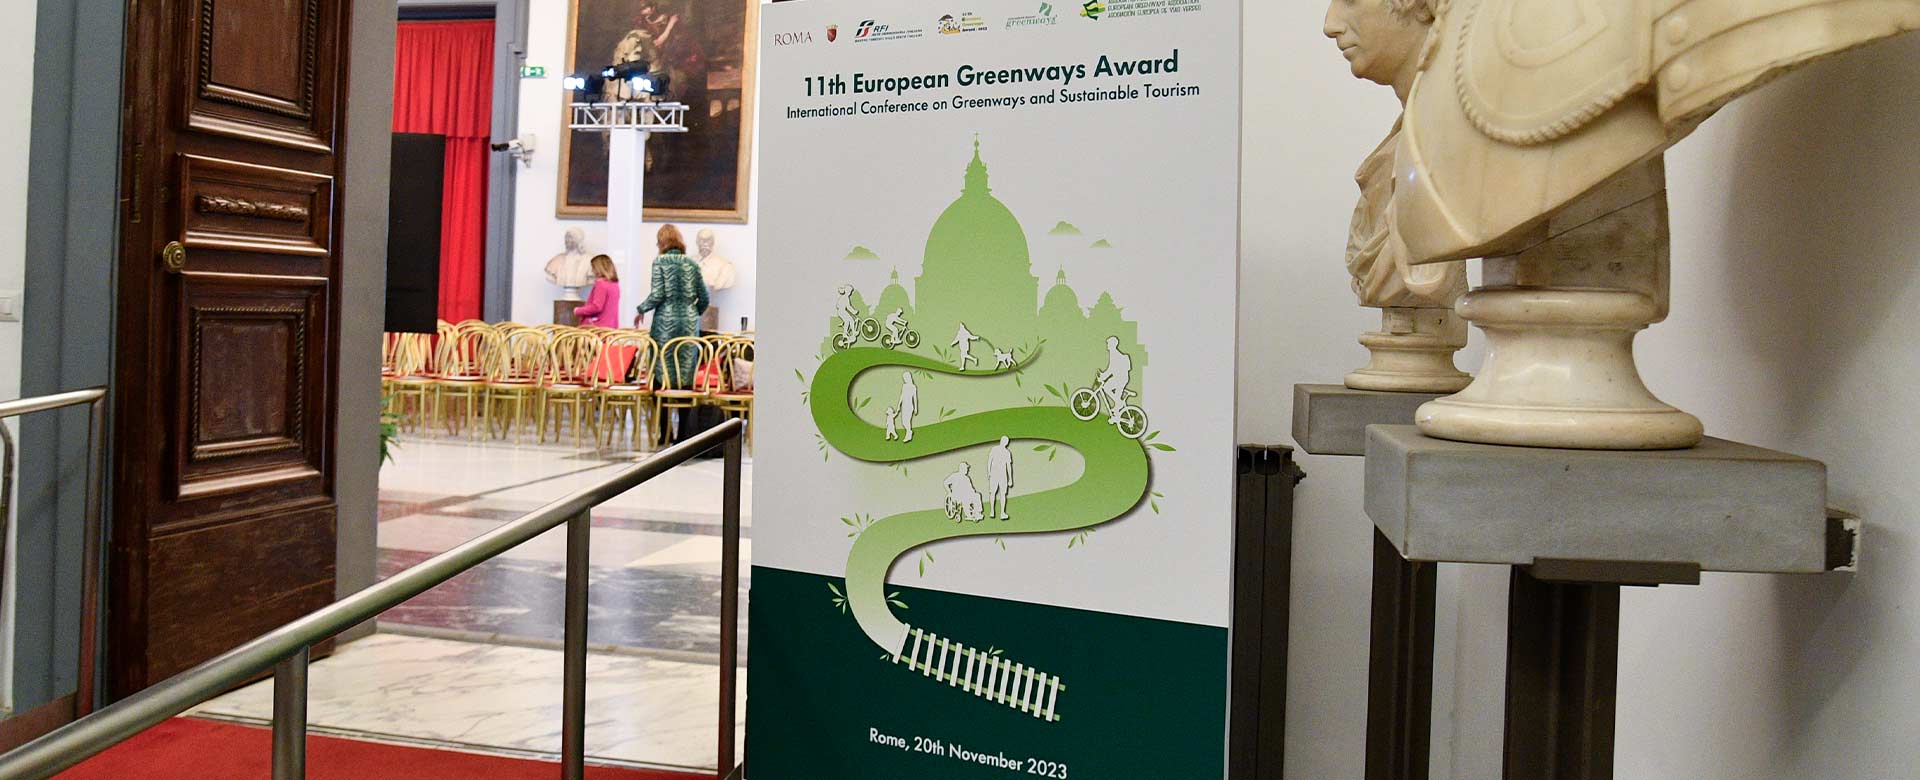 conferenza stampa european greenways award